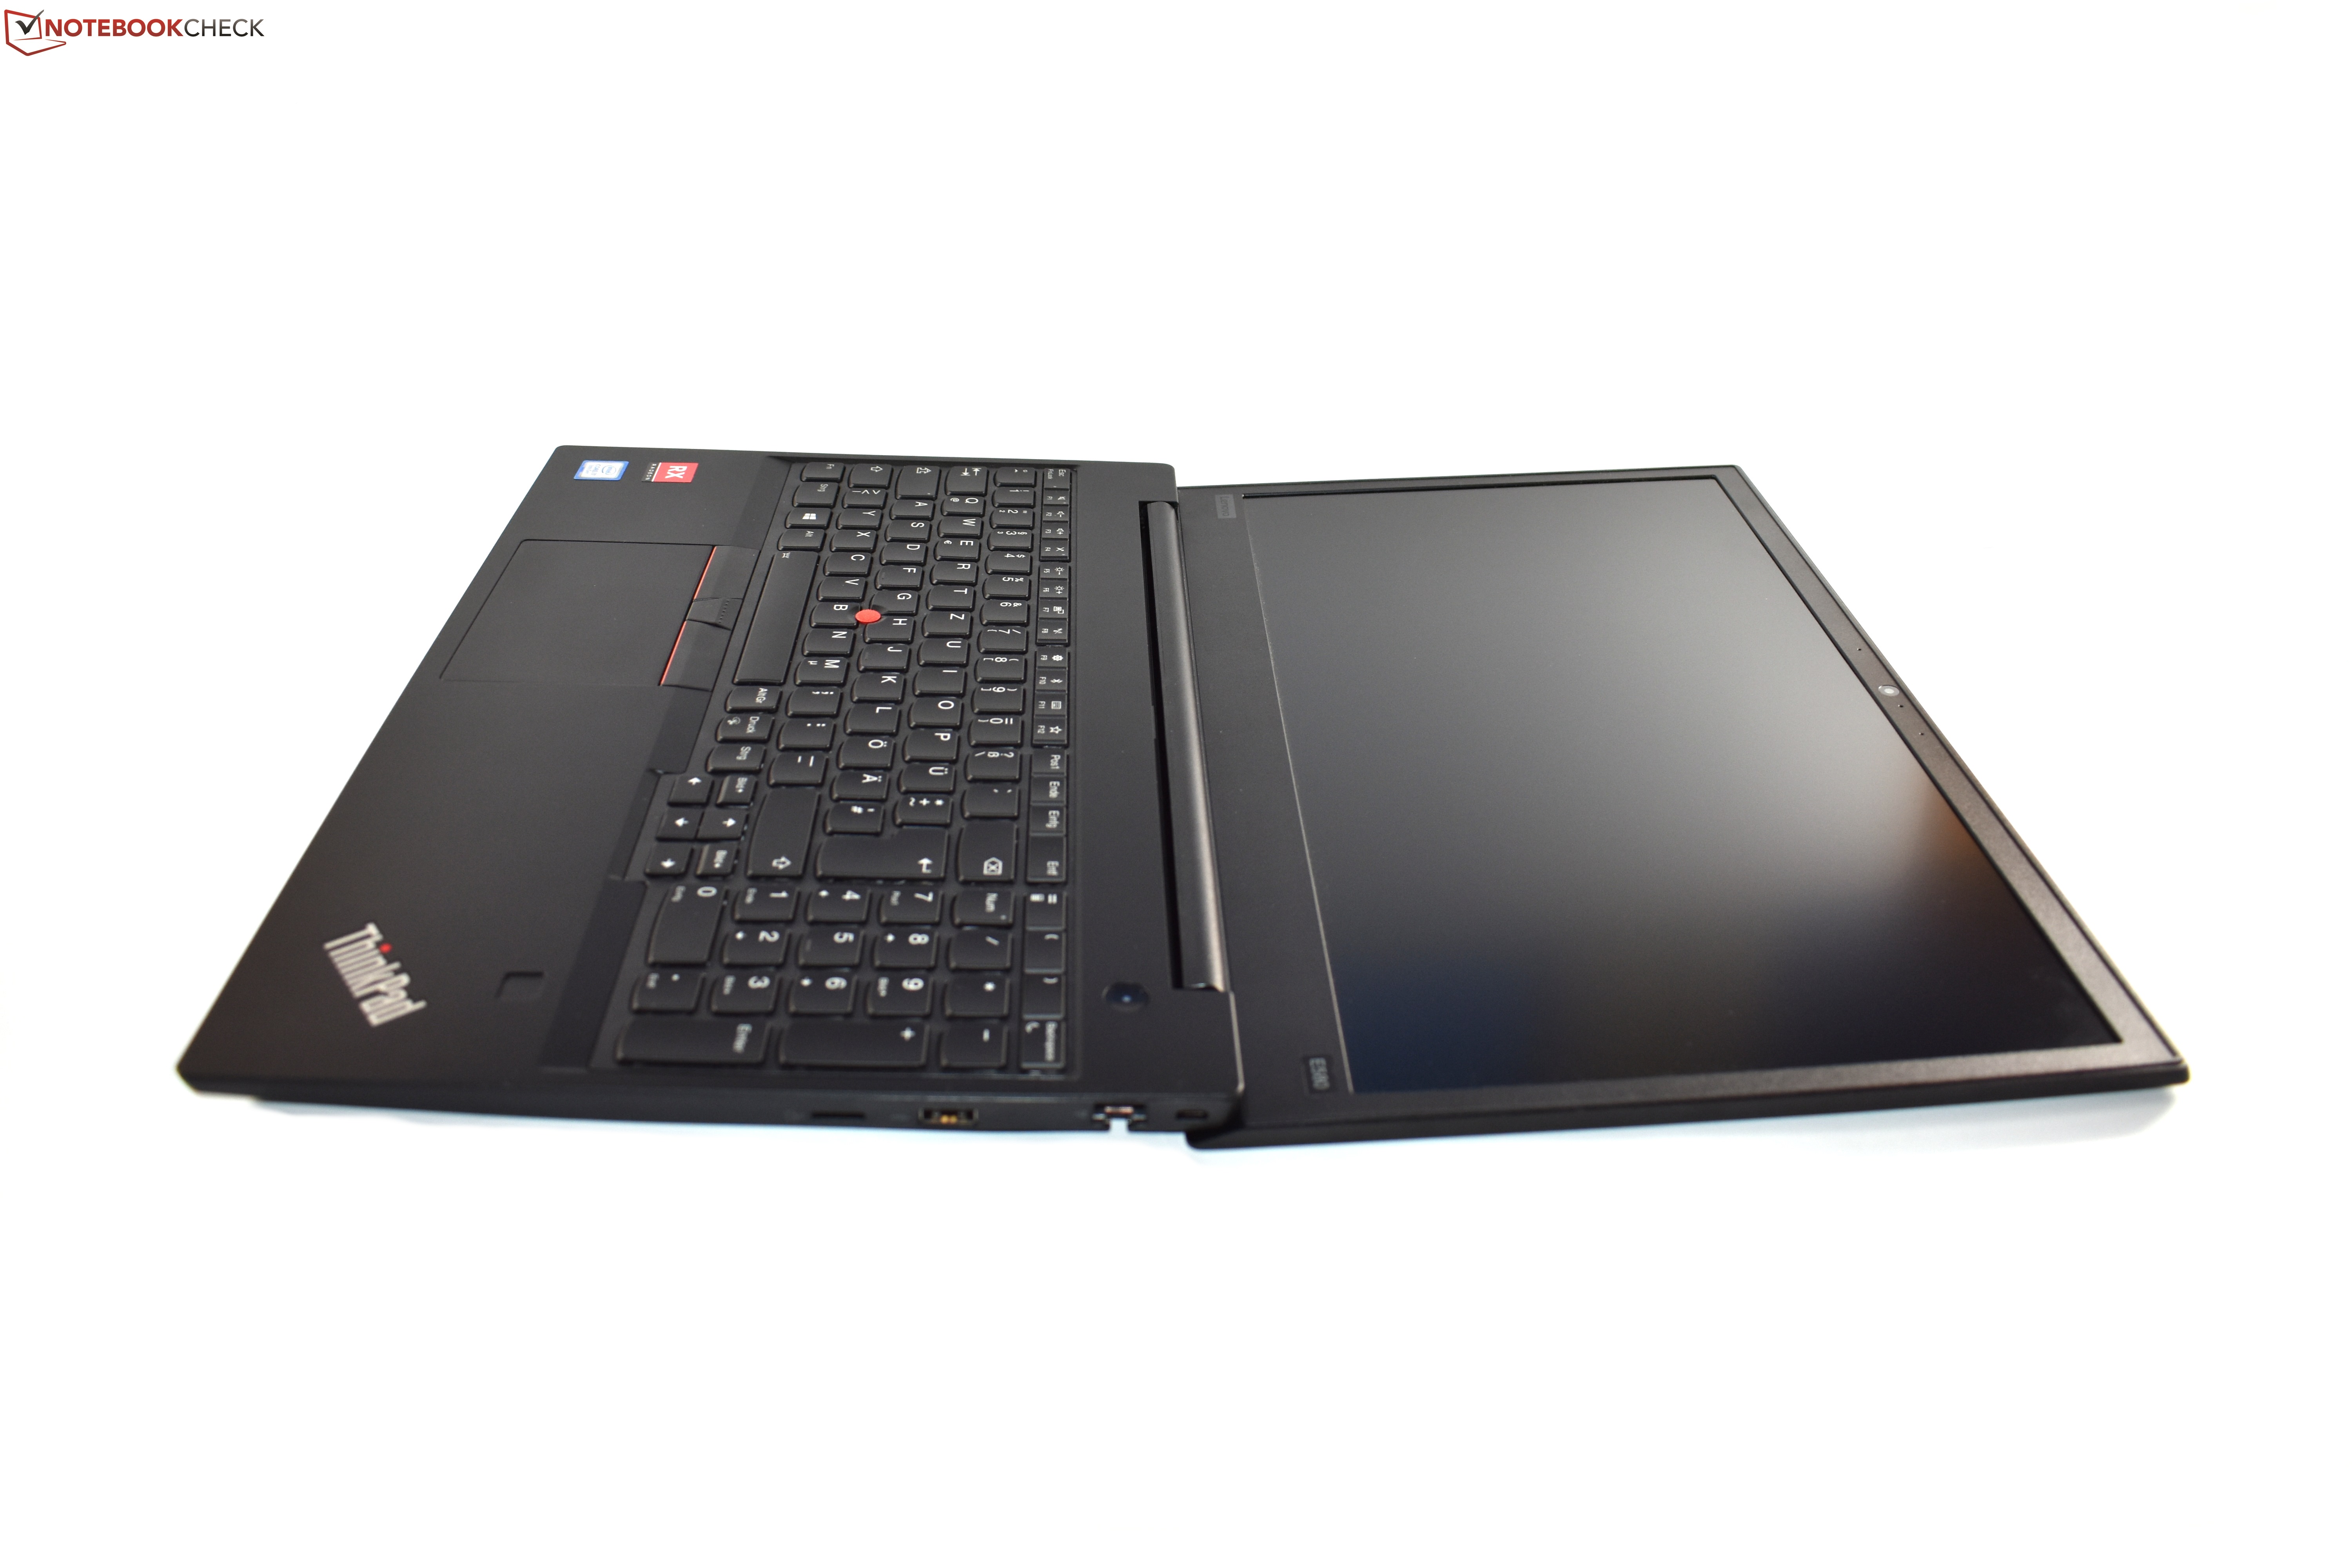 Lenovo ThinkPad E580 (i7-8550U, RX 550) Laptop Review 